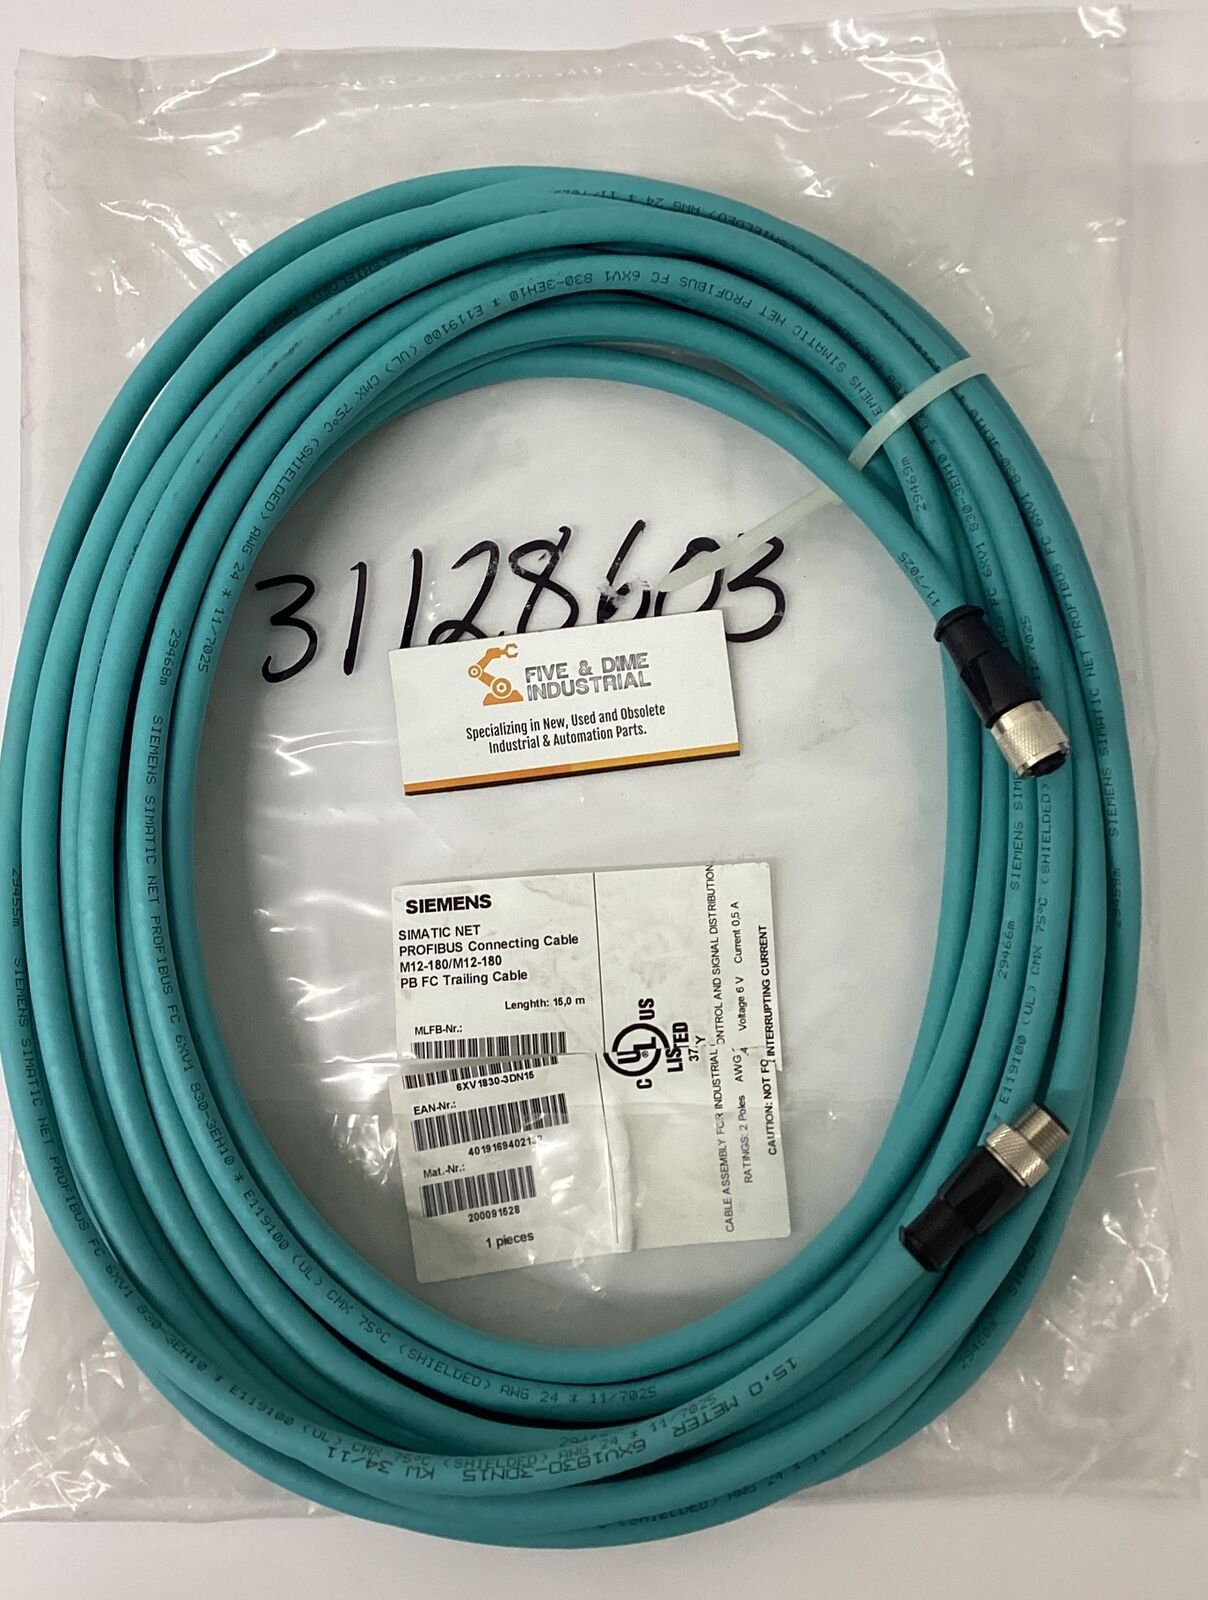 Siemens 6XV1830-3DN15 PB FC Trailing Cable 15 meter (CBL148)